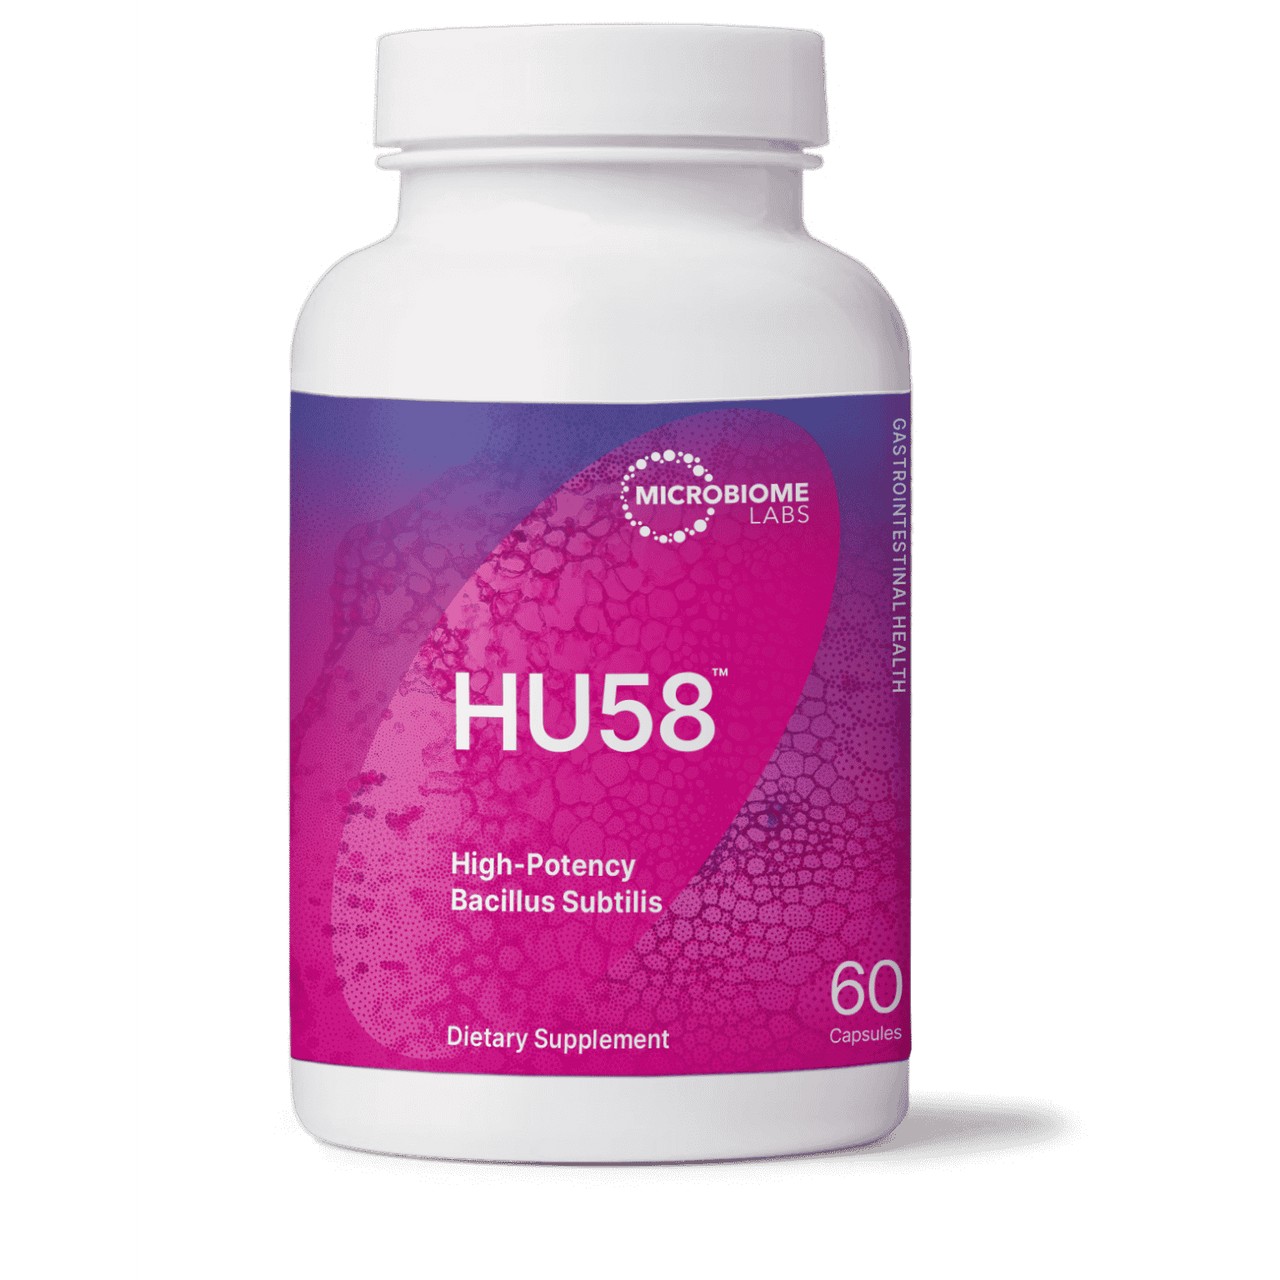 HU58 Bacillus subtilis  - Microbiome Labs - Concentrated dose of Bacillus subtilis